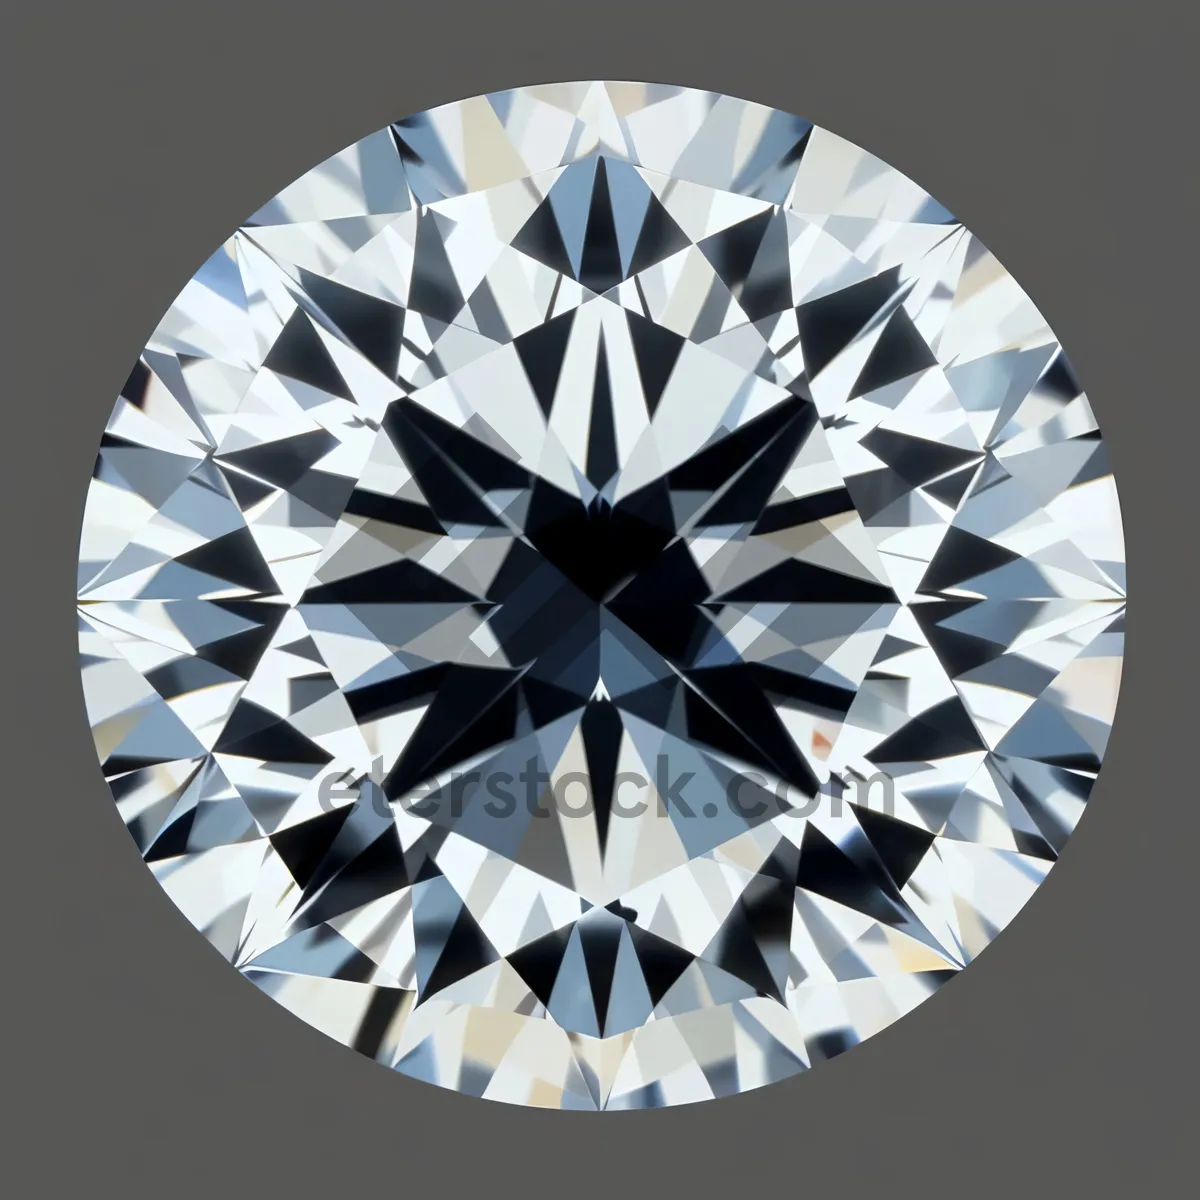 Picture of Brilliant Black Diamond Glass Gem Design